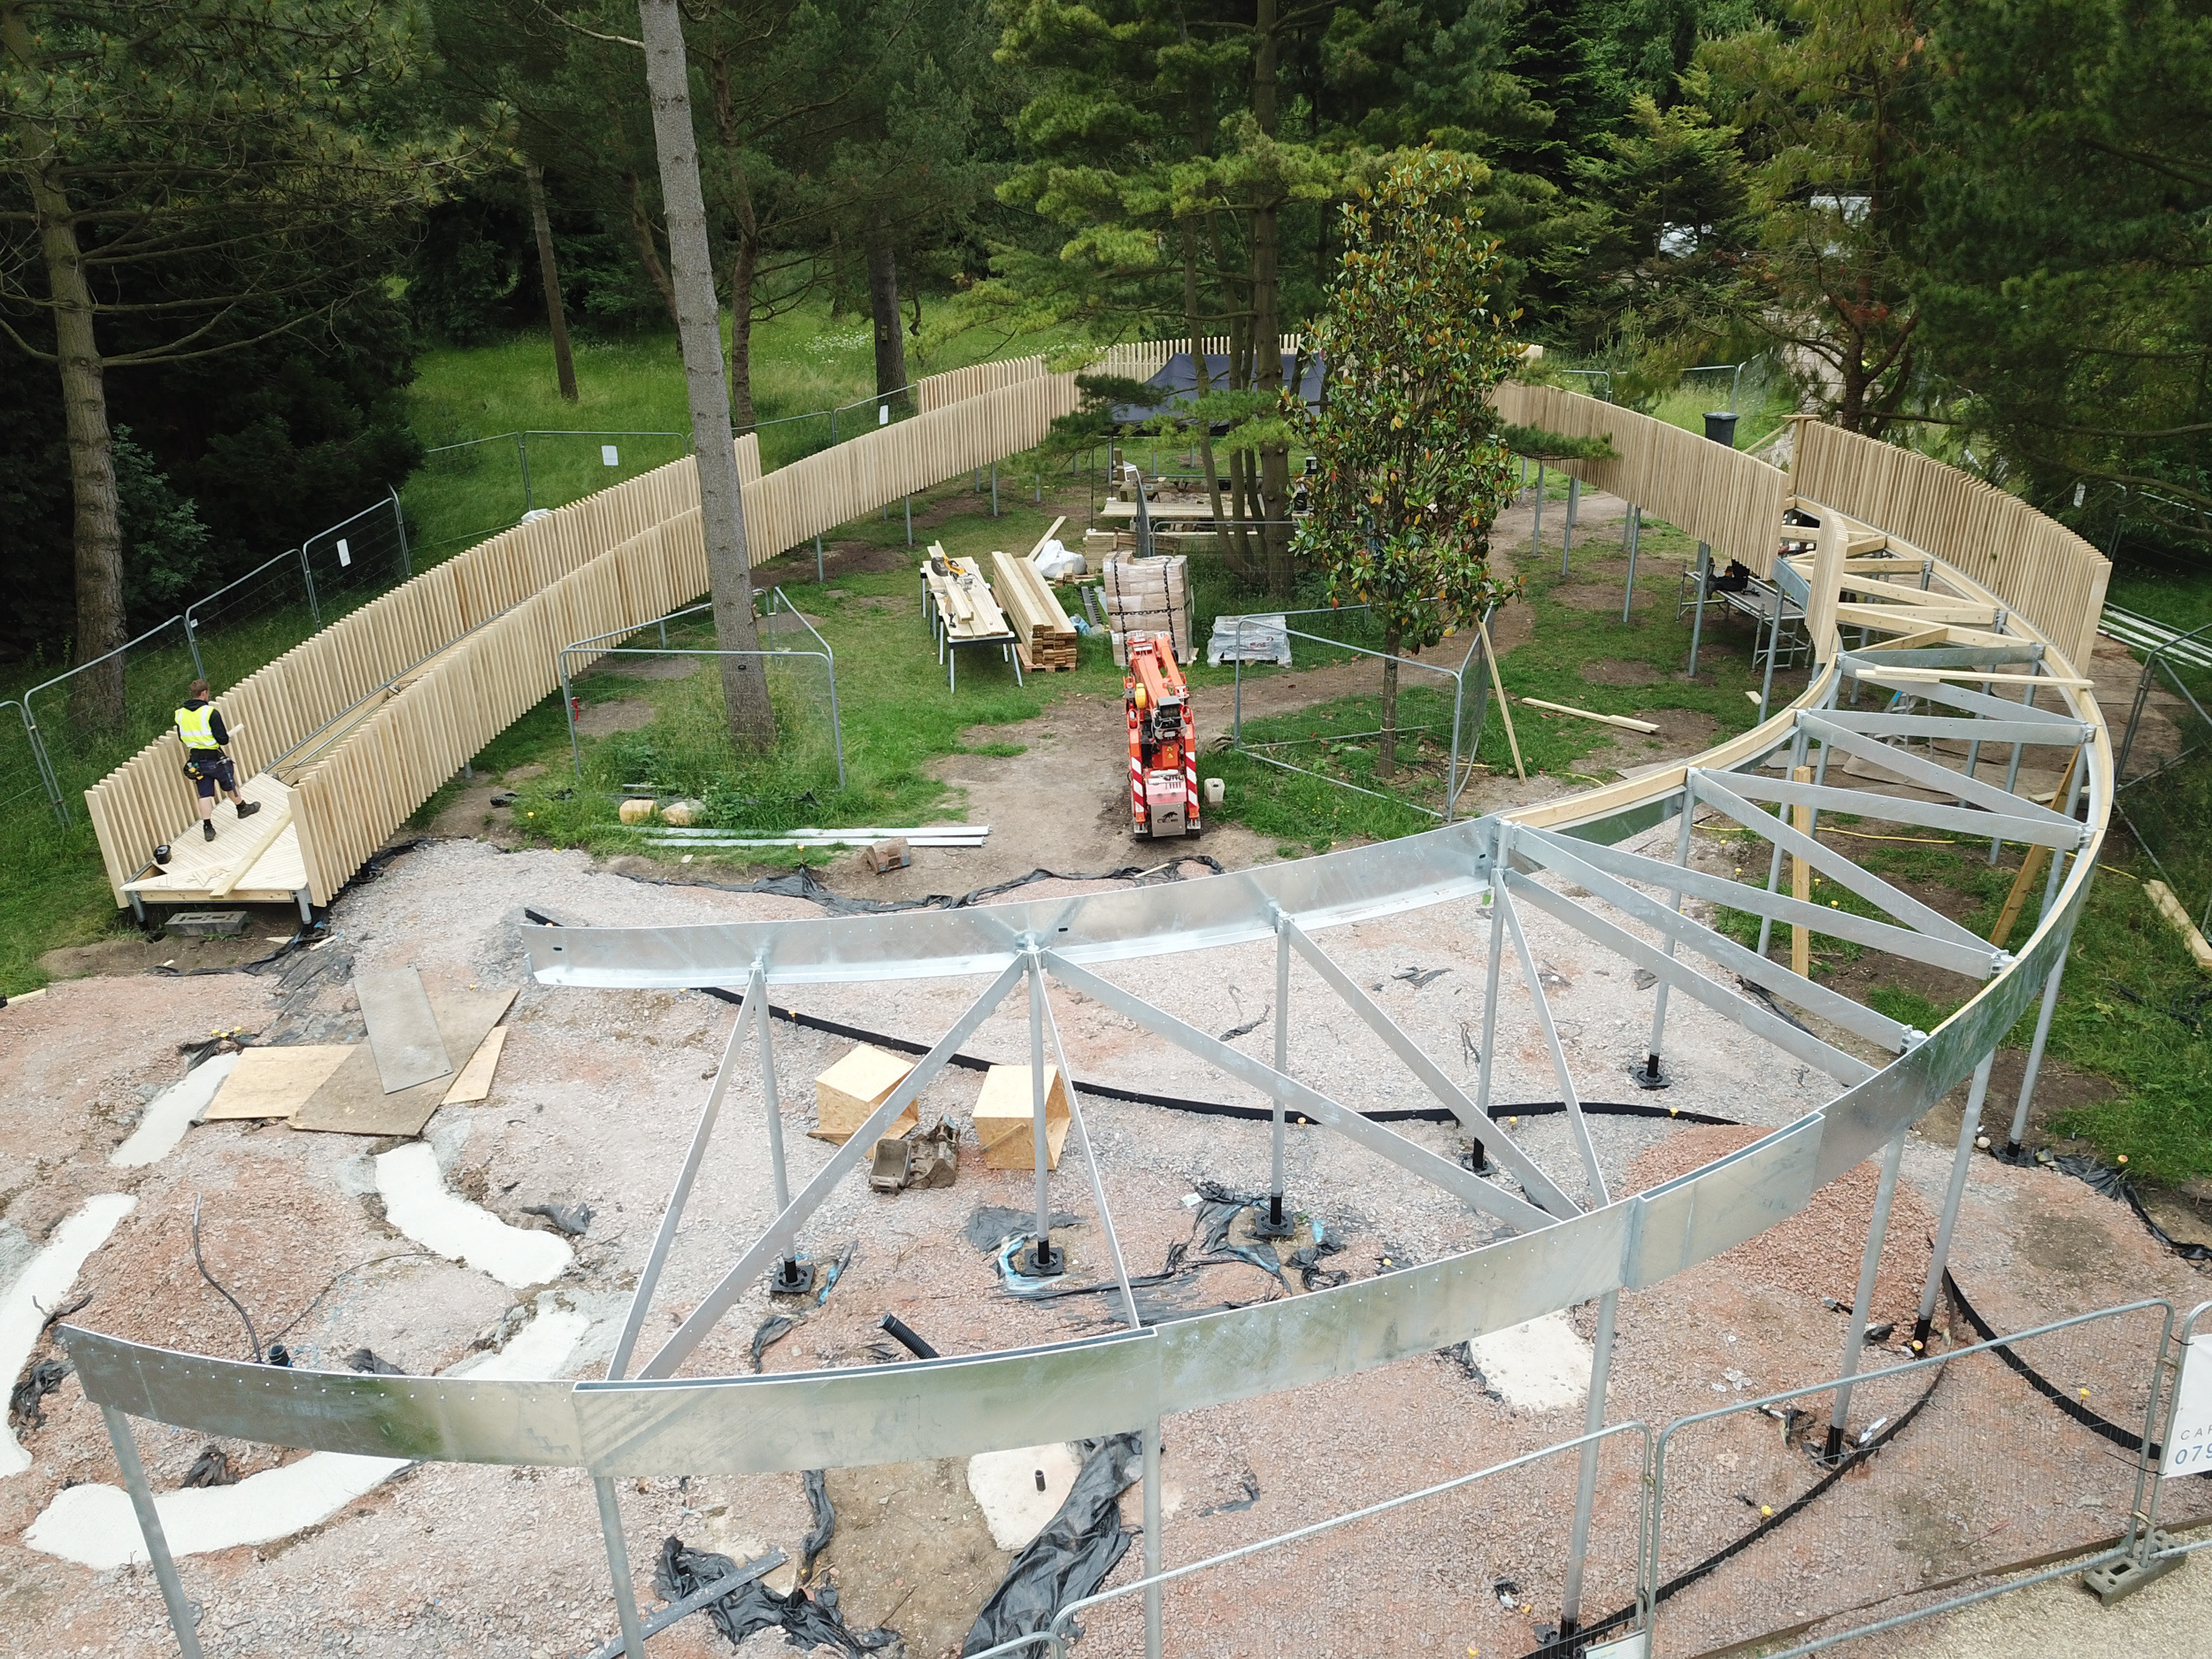 The frame under construction for Cambridge University Botanic Garden Rising Path by architects CDC Studio